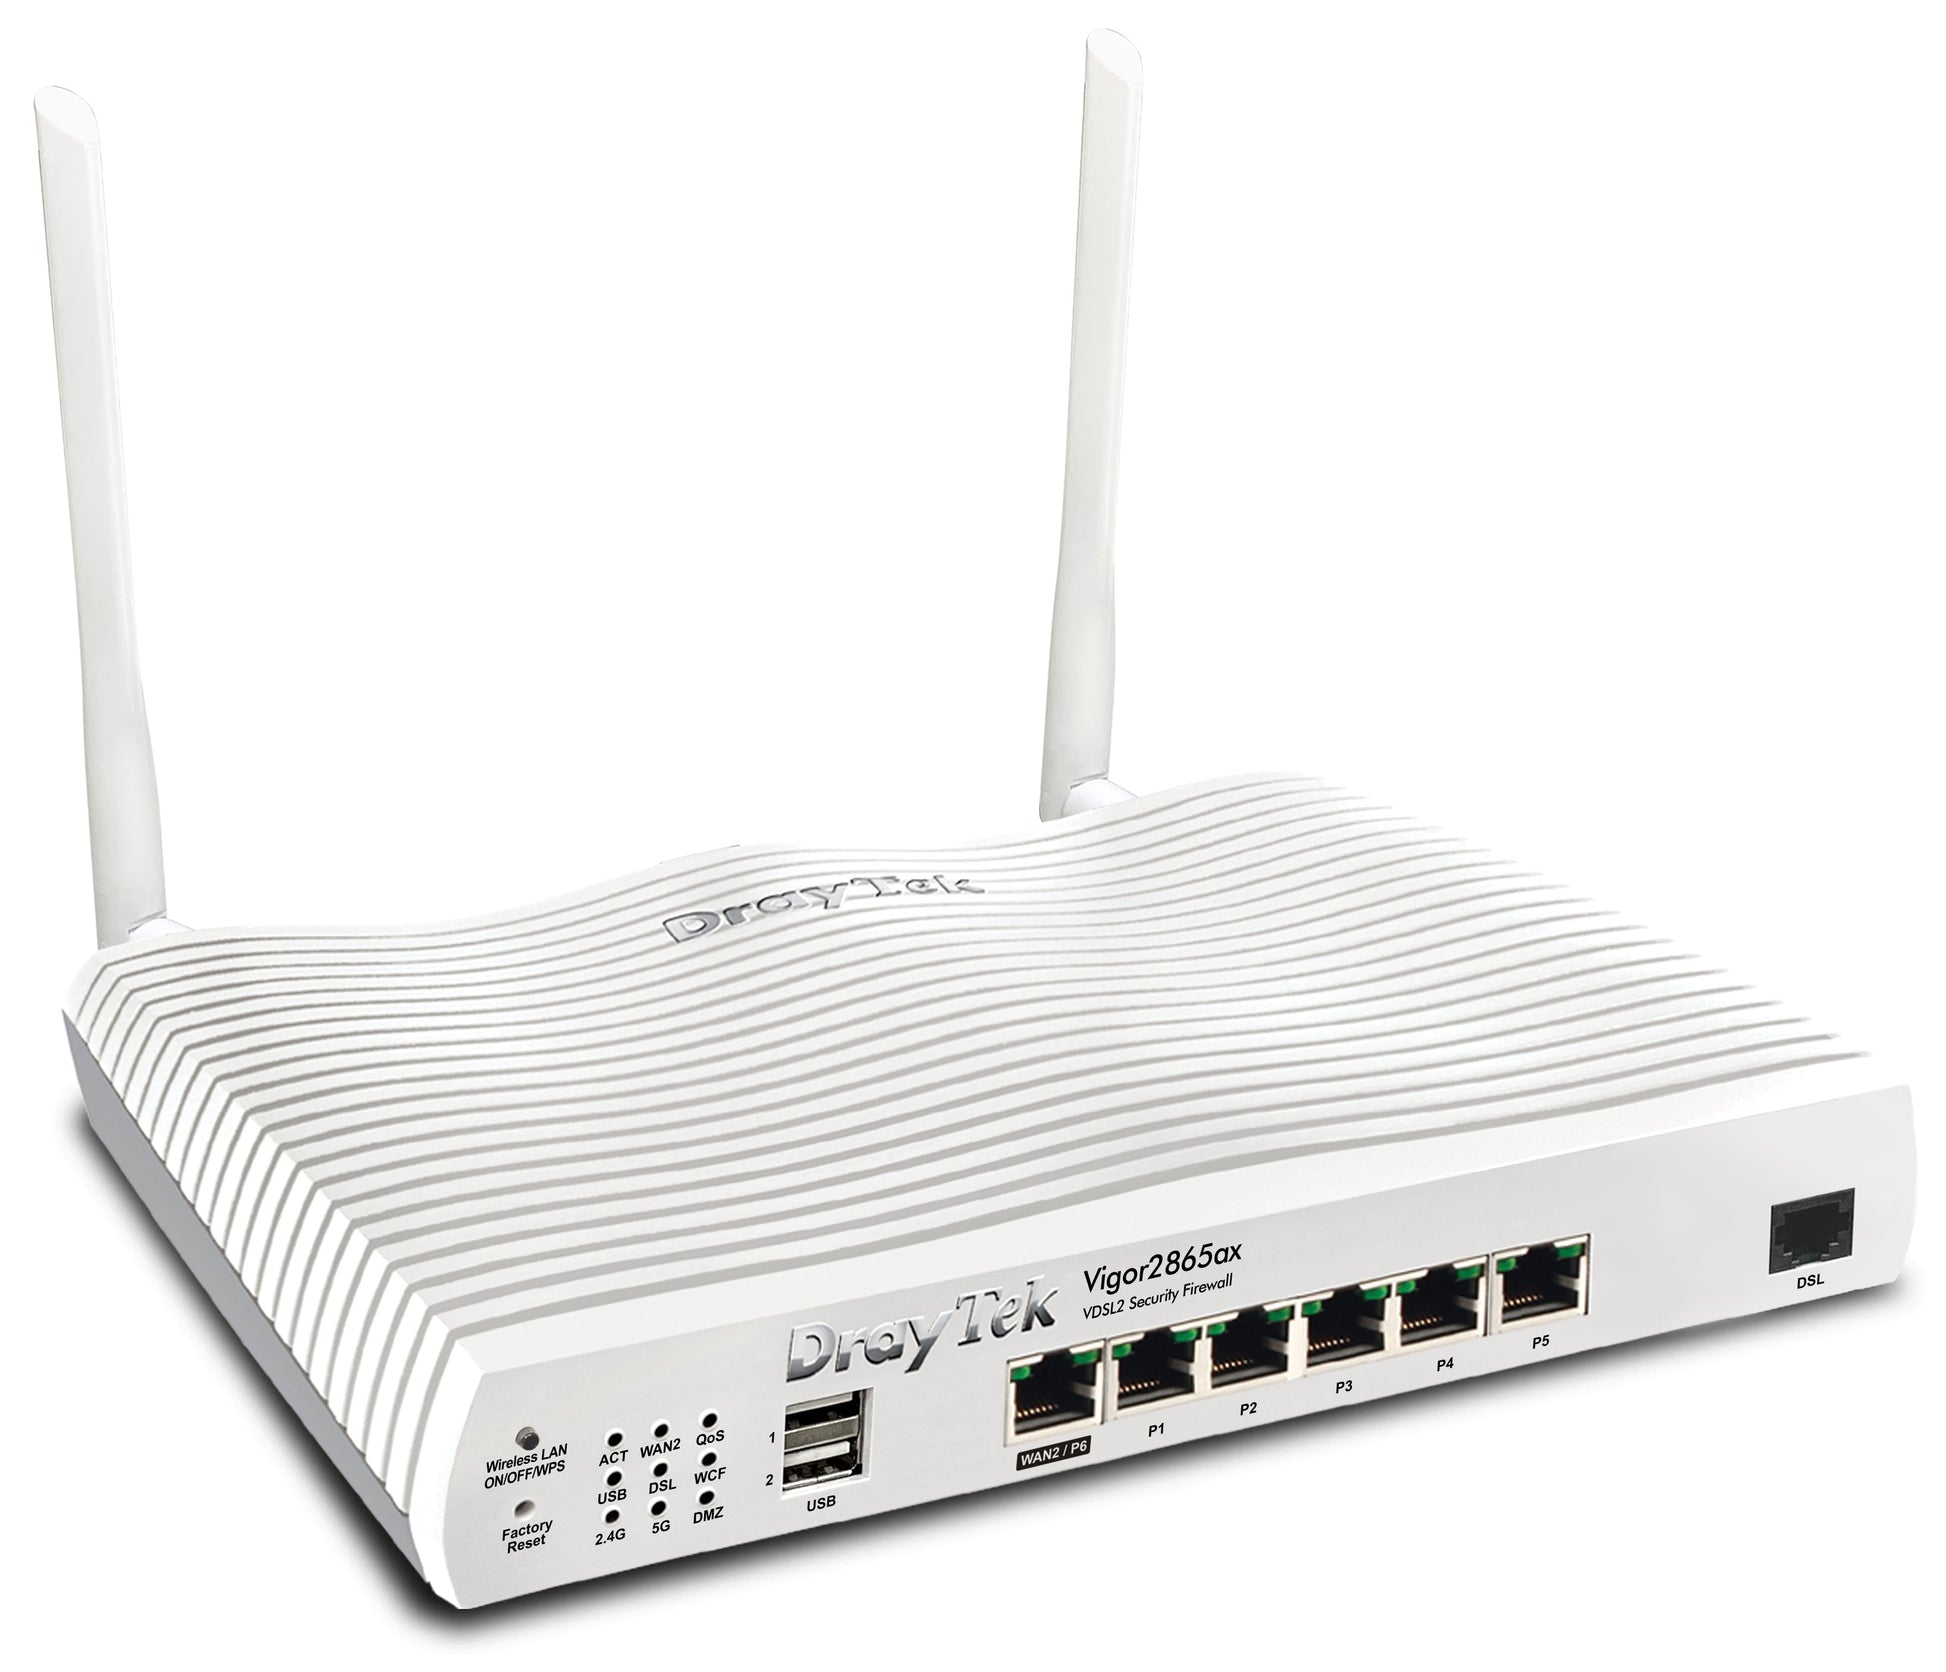 DrayTek 2865ax Dual-WAN ADSL+/VDSL2 WiFi 6 Broadband Router Left Hand View